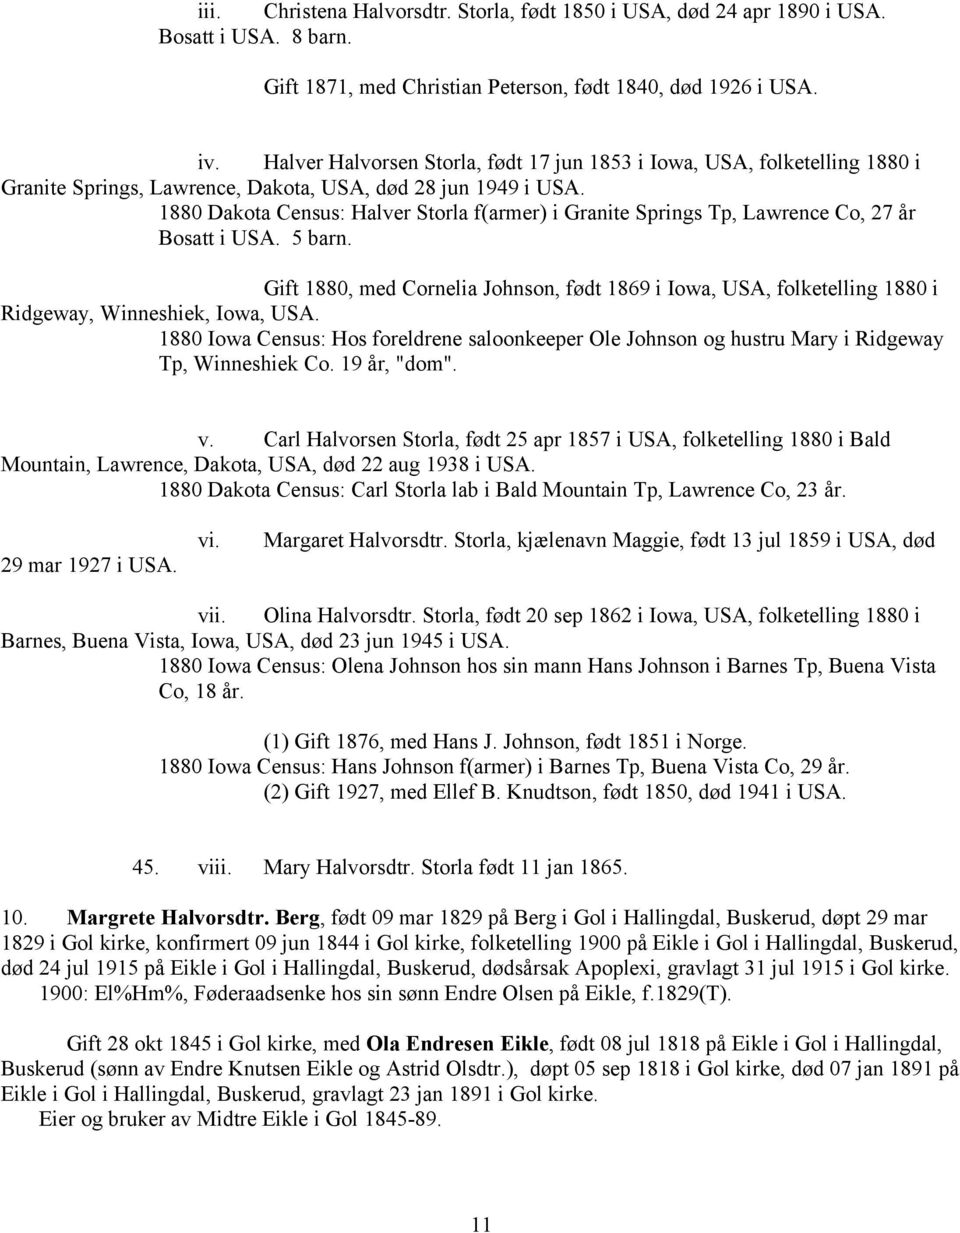 1880 Dakota Census: Halver Storla f(armer) i Granite Springs Tp, Lawrence Co, 27 år Bosatt i USA. 5 barn.